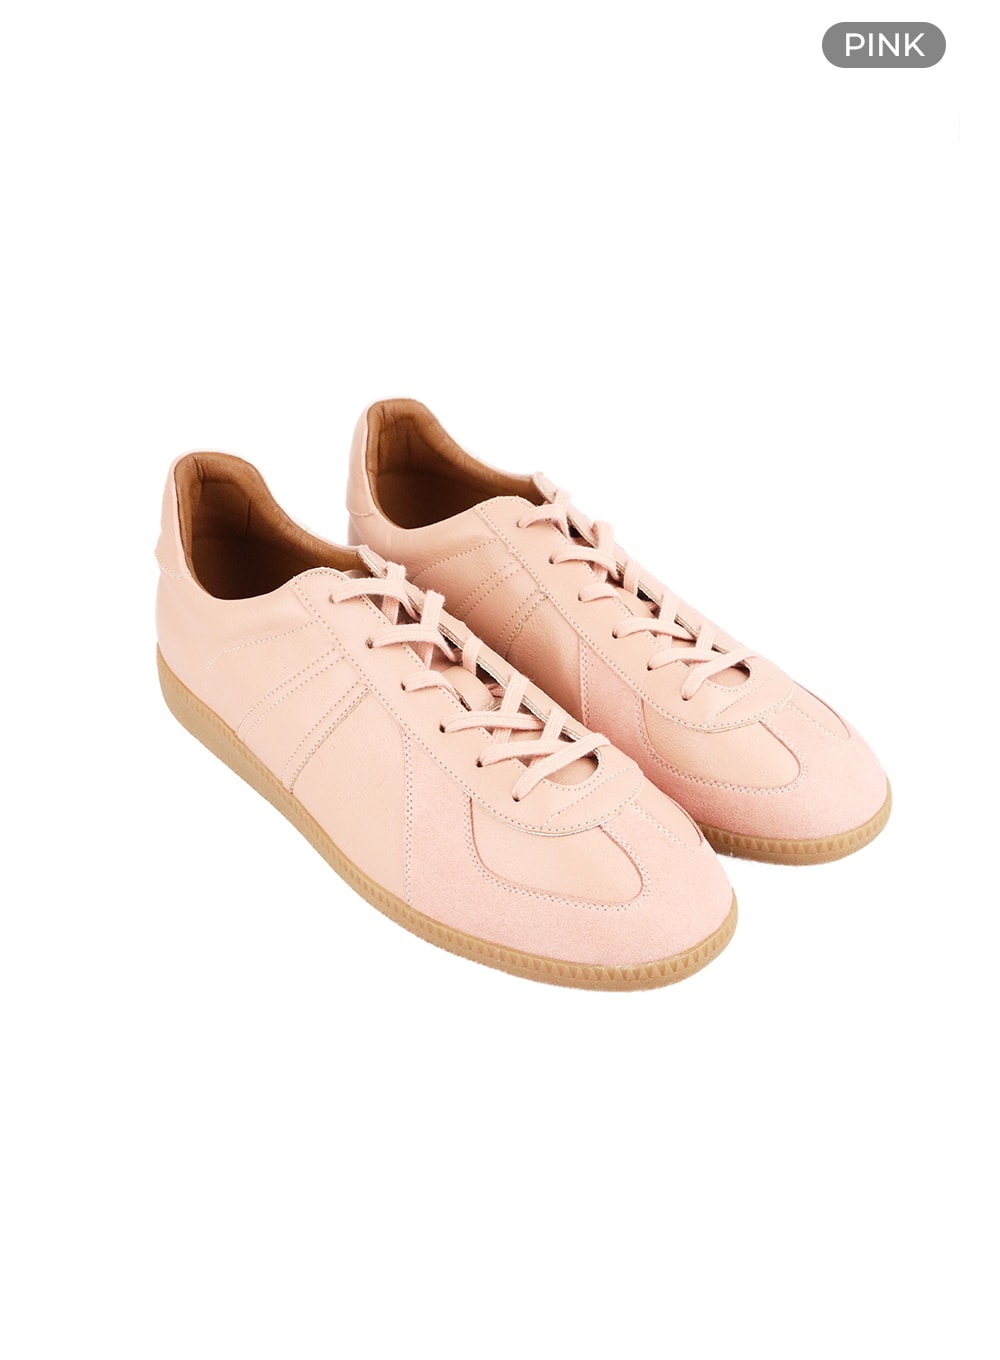 mens-multipiece-sneakers-ia401 / Pink